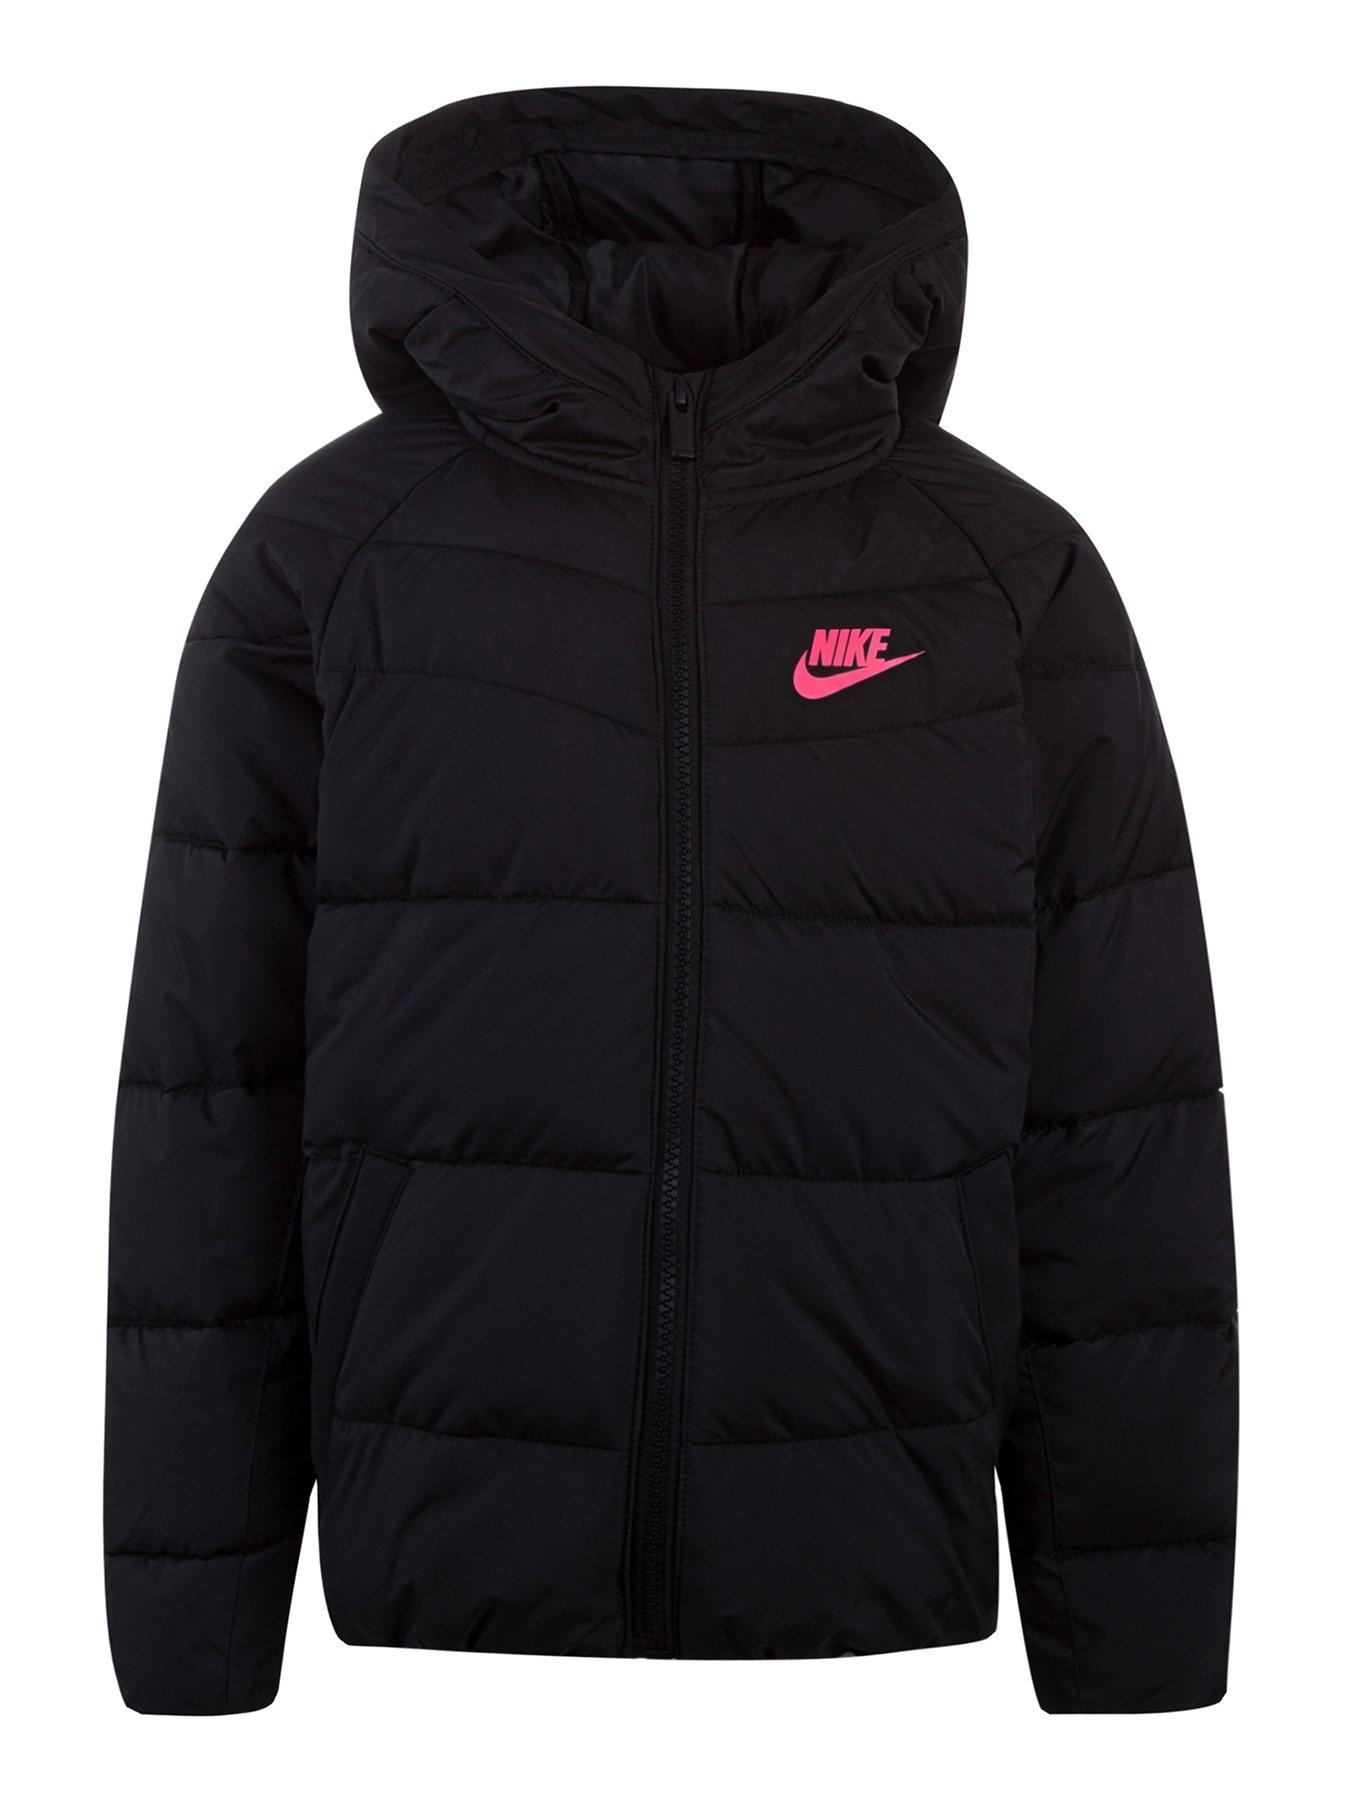 Nike Childrens NSW Filled Jacket - Black/Pink | very.co.uk